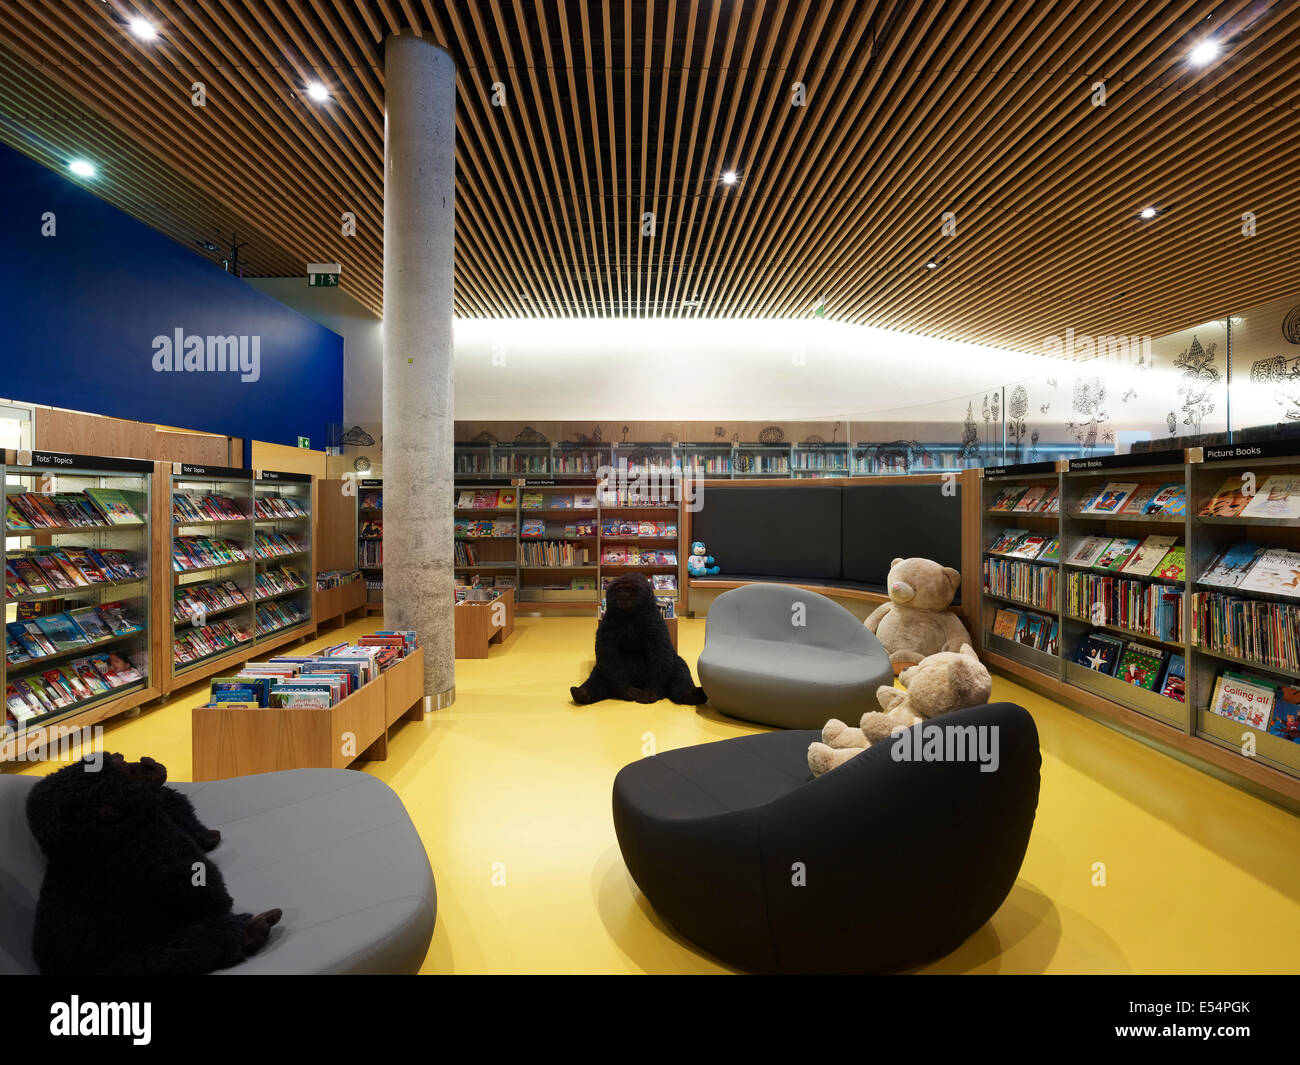 Library of Birmingham, Birmingham, United Kingdom. Architect: Mecanoo Architecten, 2013. Stock Photo